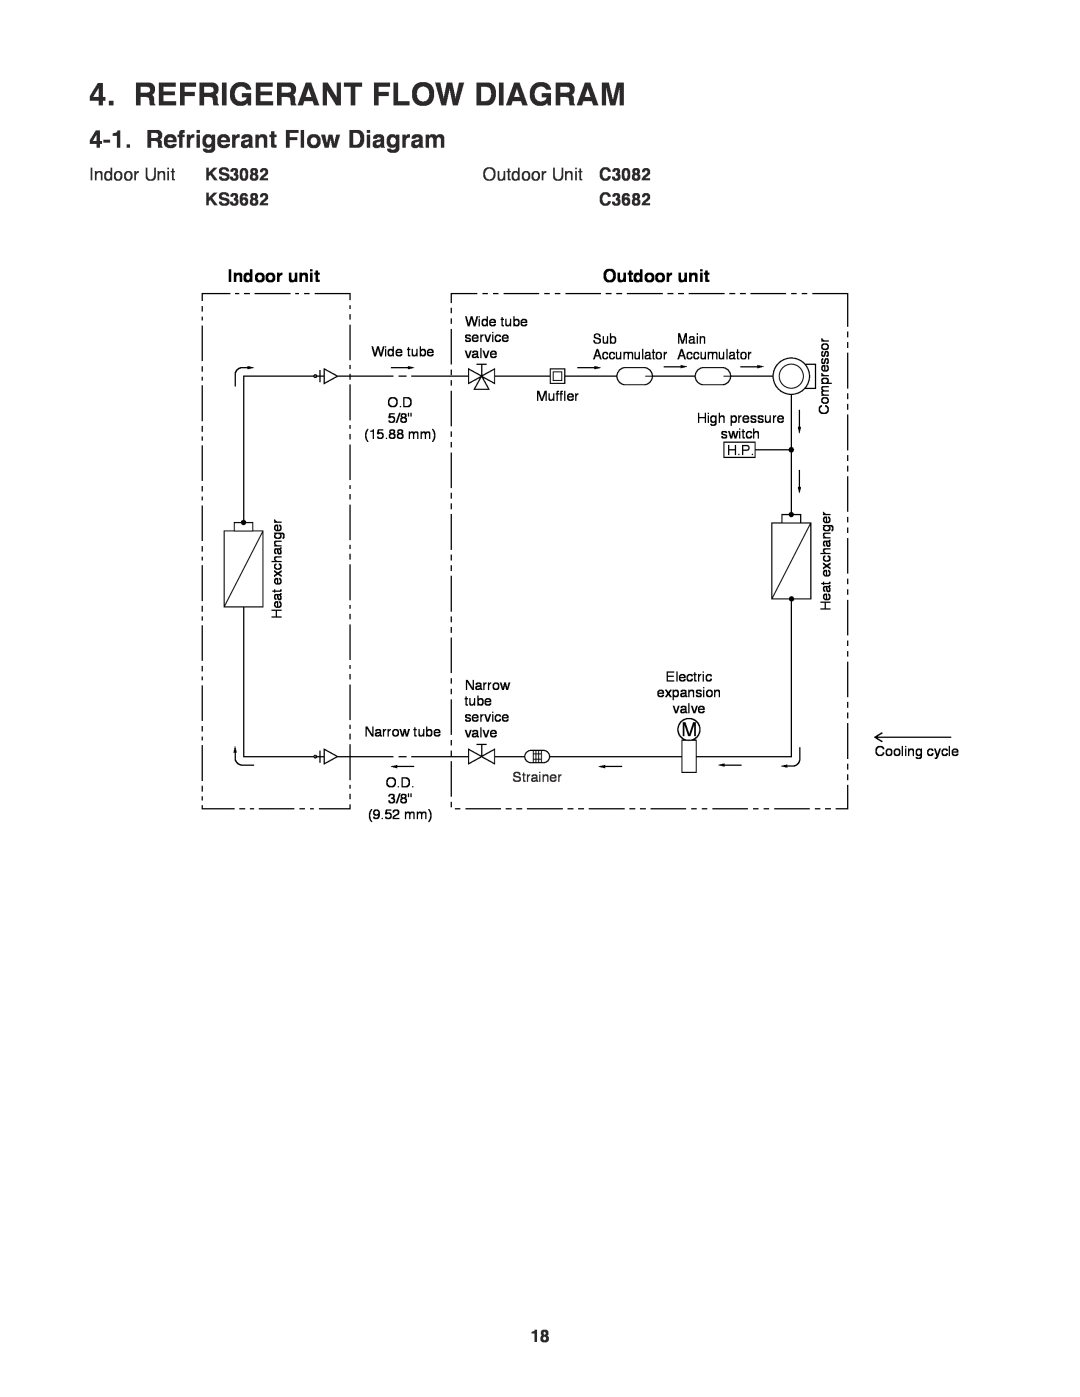 Sanyo C3682 Refrigerant Flow Diagram, Indoor Unit KS3082, Outdoor Unit C3082, KS3682, Indoor unit, Outdoor unit 